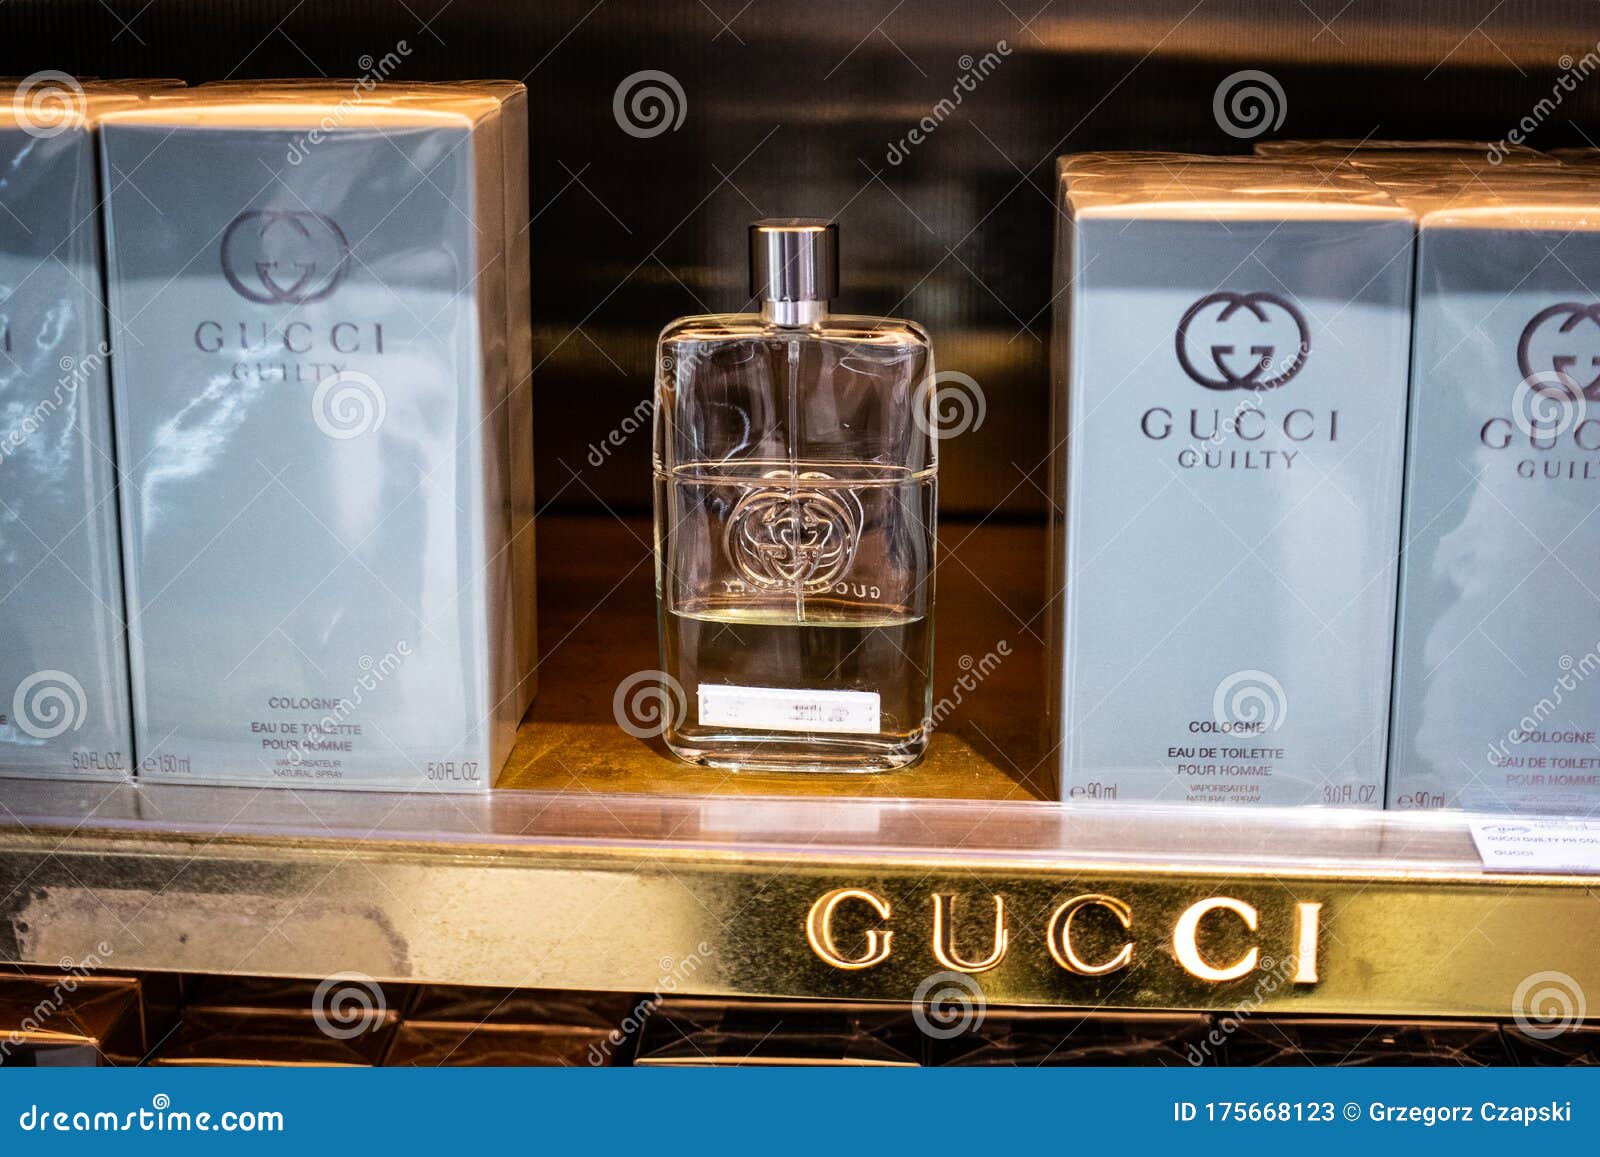 gucci guilty fragrance shop